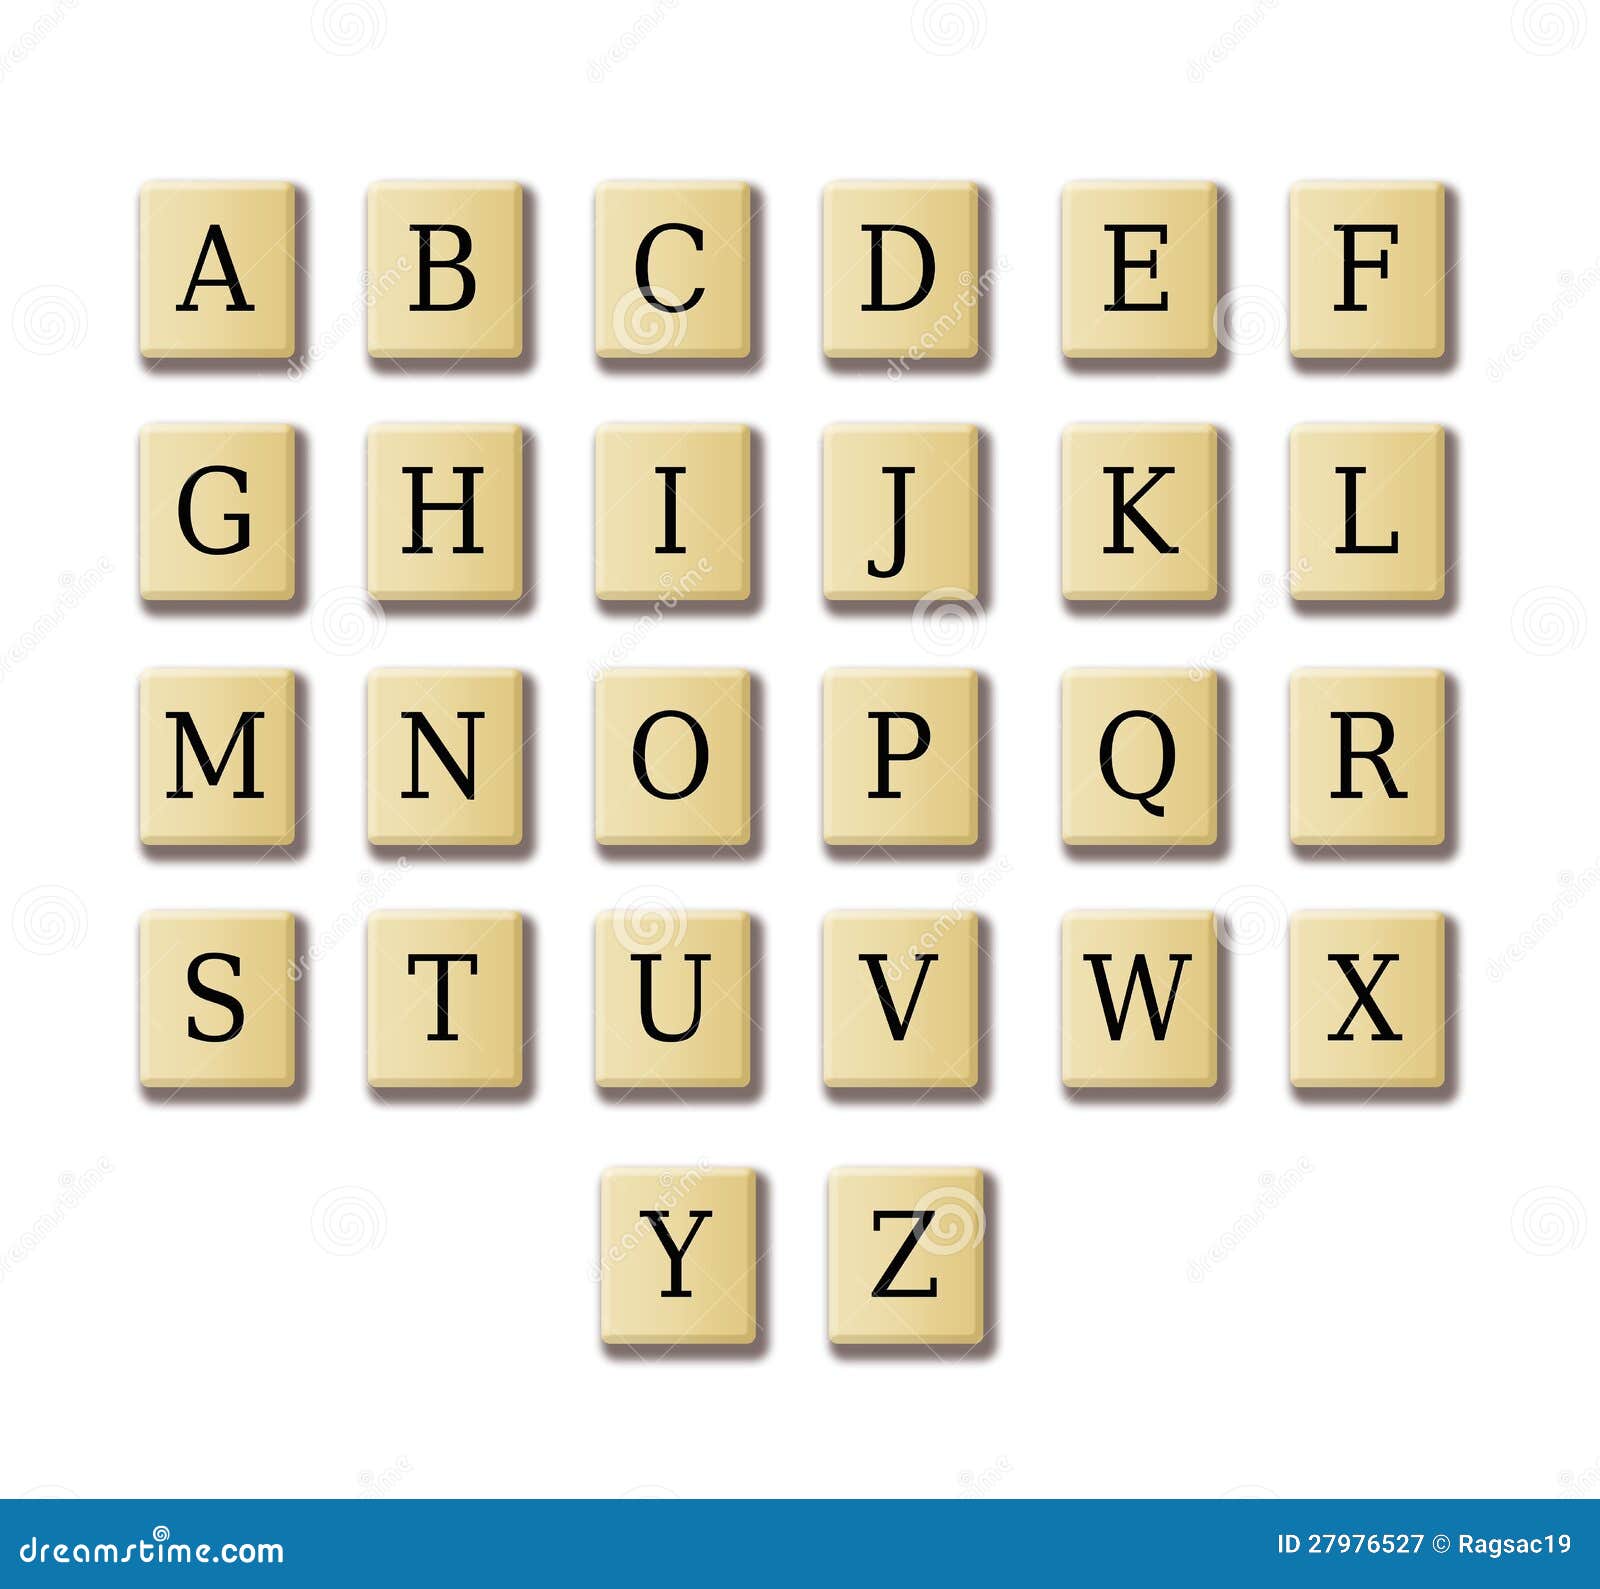 Crossword design alphabet stock illustration. Illustration of